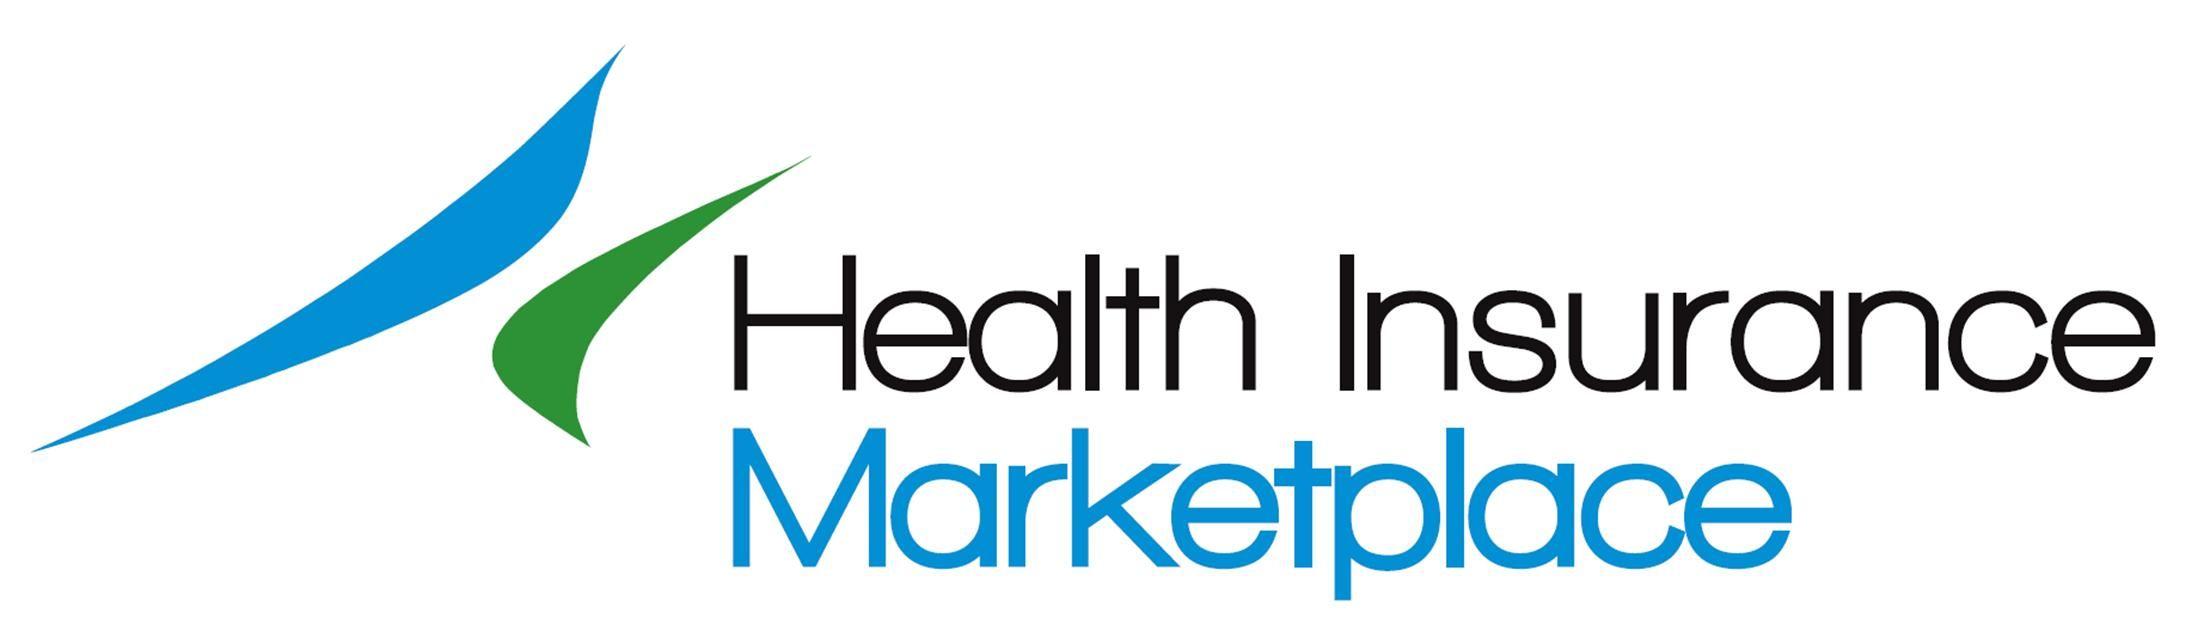 Marketplace Logo - Health Insurance Marketplace Stacked Logo Community Health